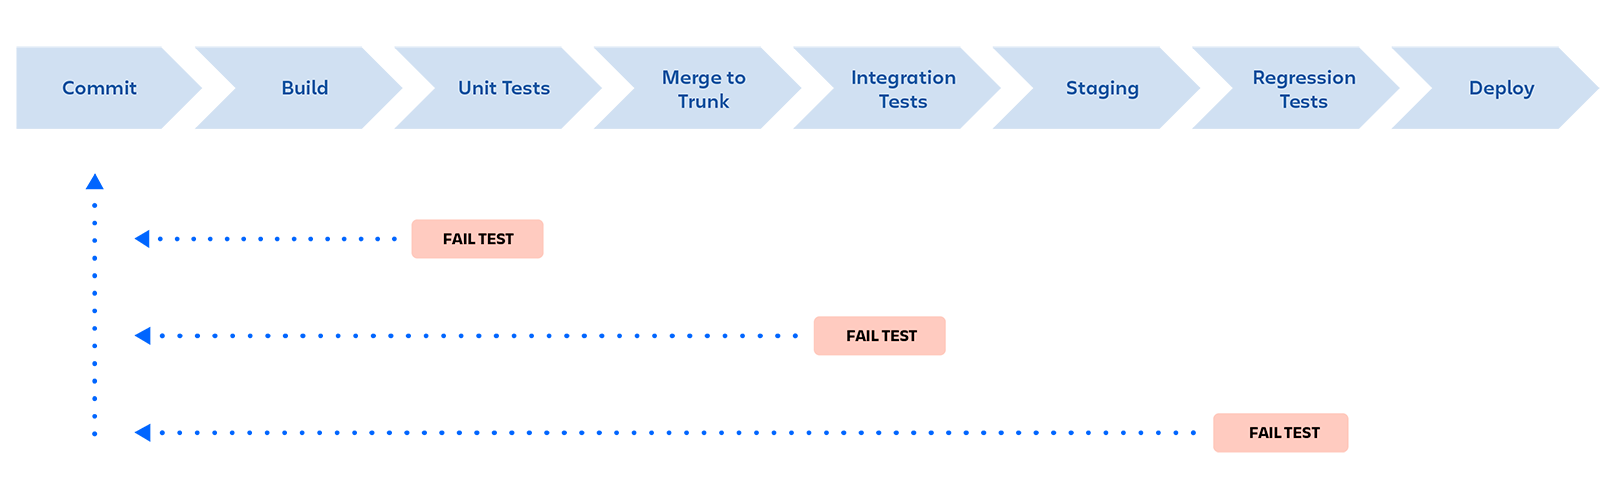 DevOps パイプラインはコミット、構築、ユニット テスト、トランクへのマージ、統合テスト、ステージング、回帰テスト、デプロイで構成されます。いずれかの段階でテストが失敗するとパイプラインは停止され、開発者にフィードバックが提供されます。